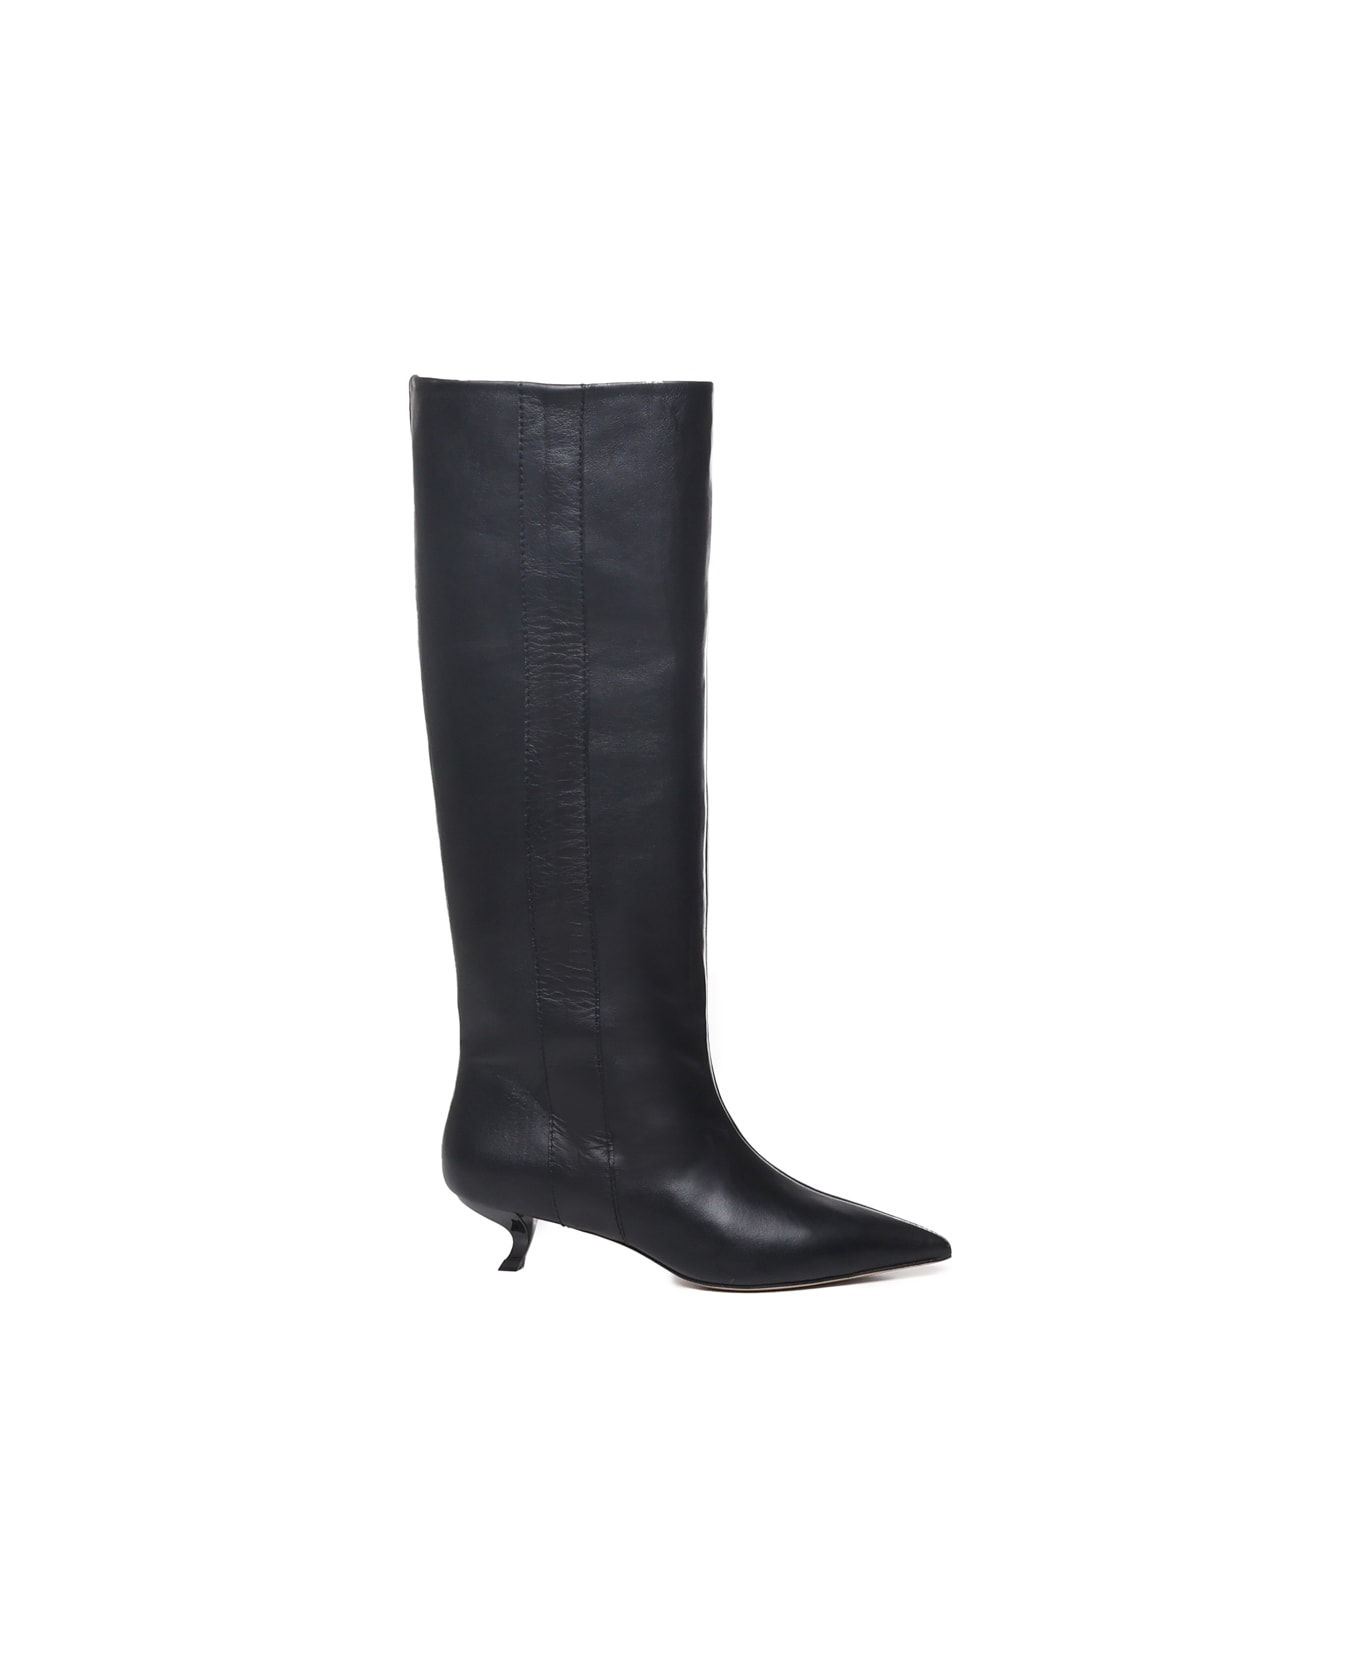 Alchimia Low Heel Leather Boots - Black ブーツ